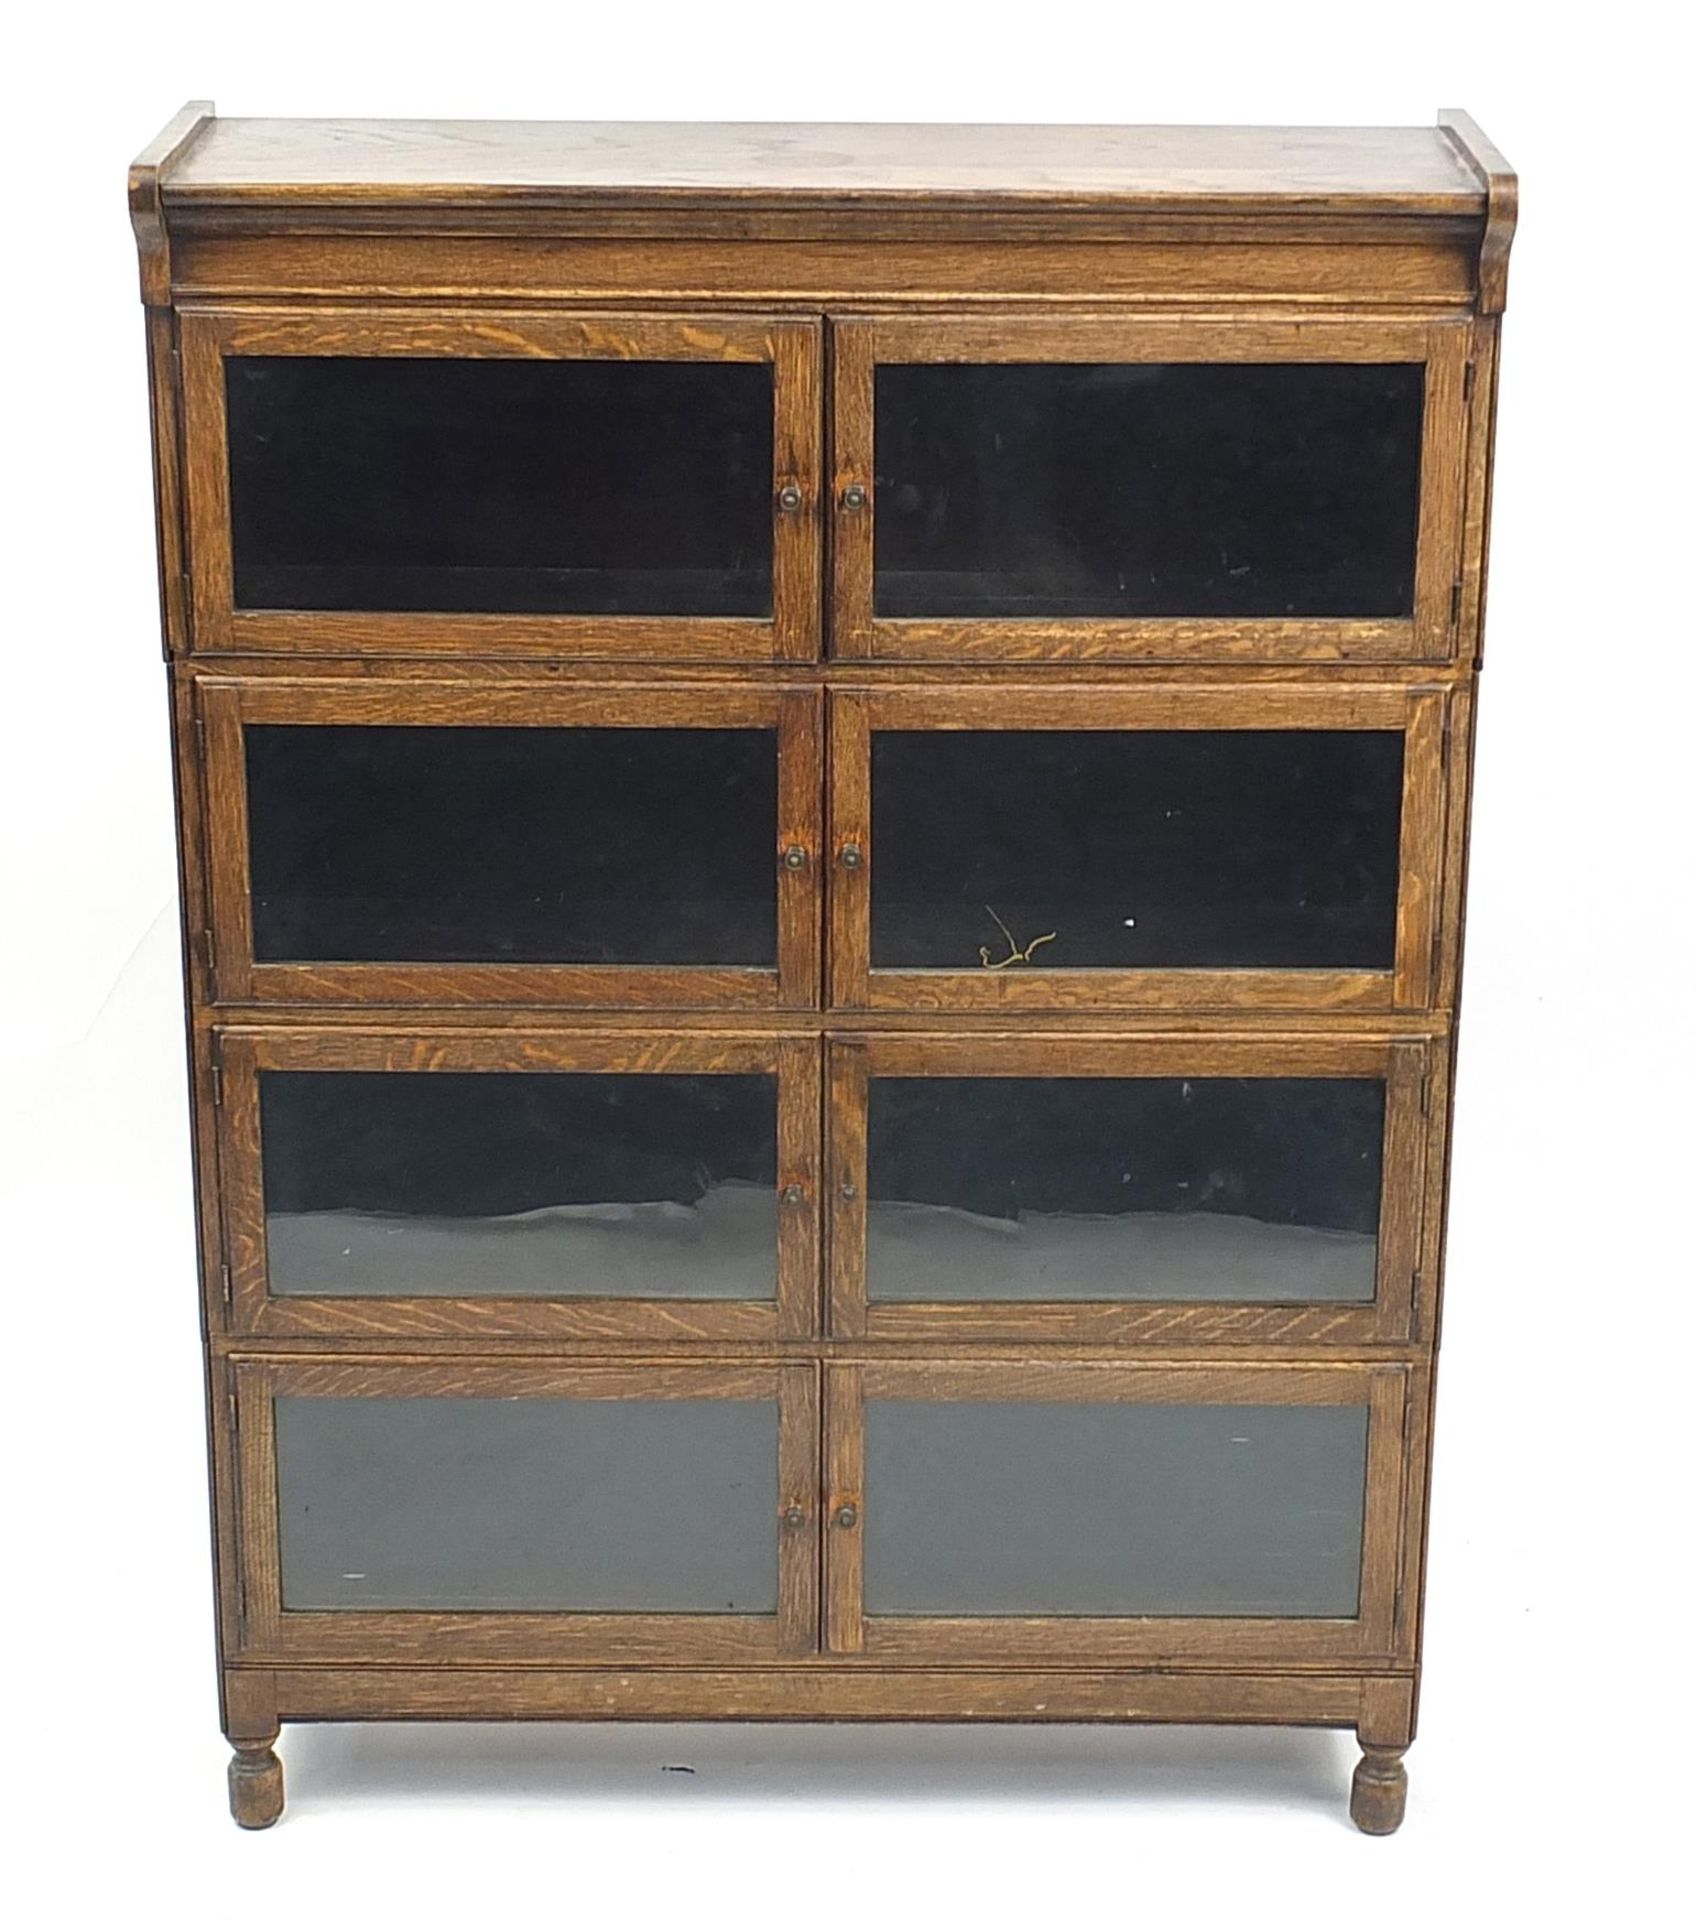 Oak four tier Globe Wernicke style bookcase, 125cm H x 89cm W x 25.5cm D - Image 2 of 3